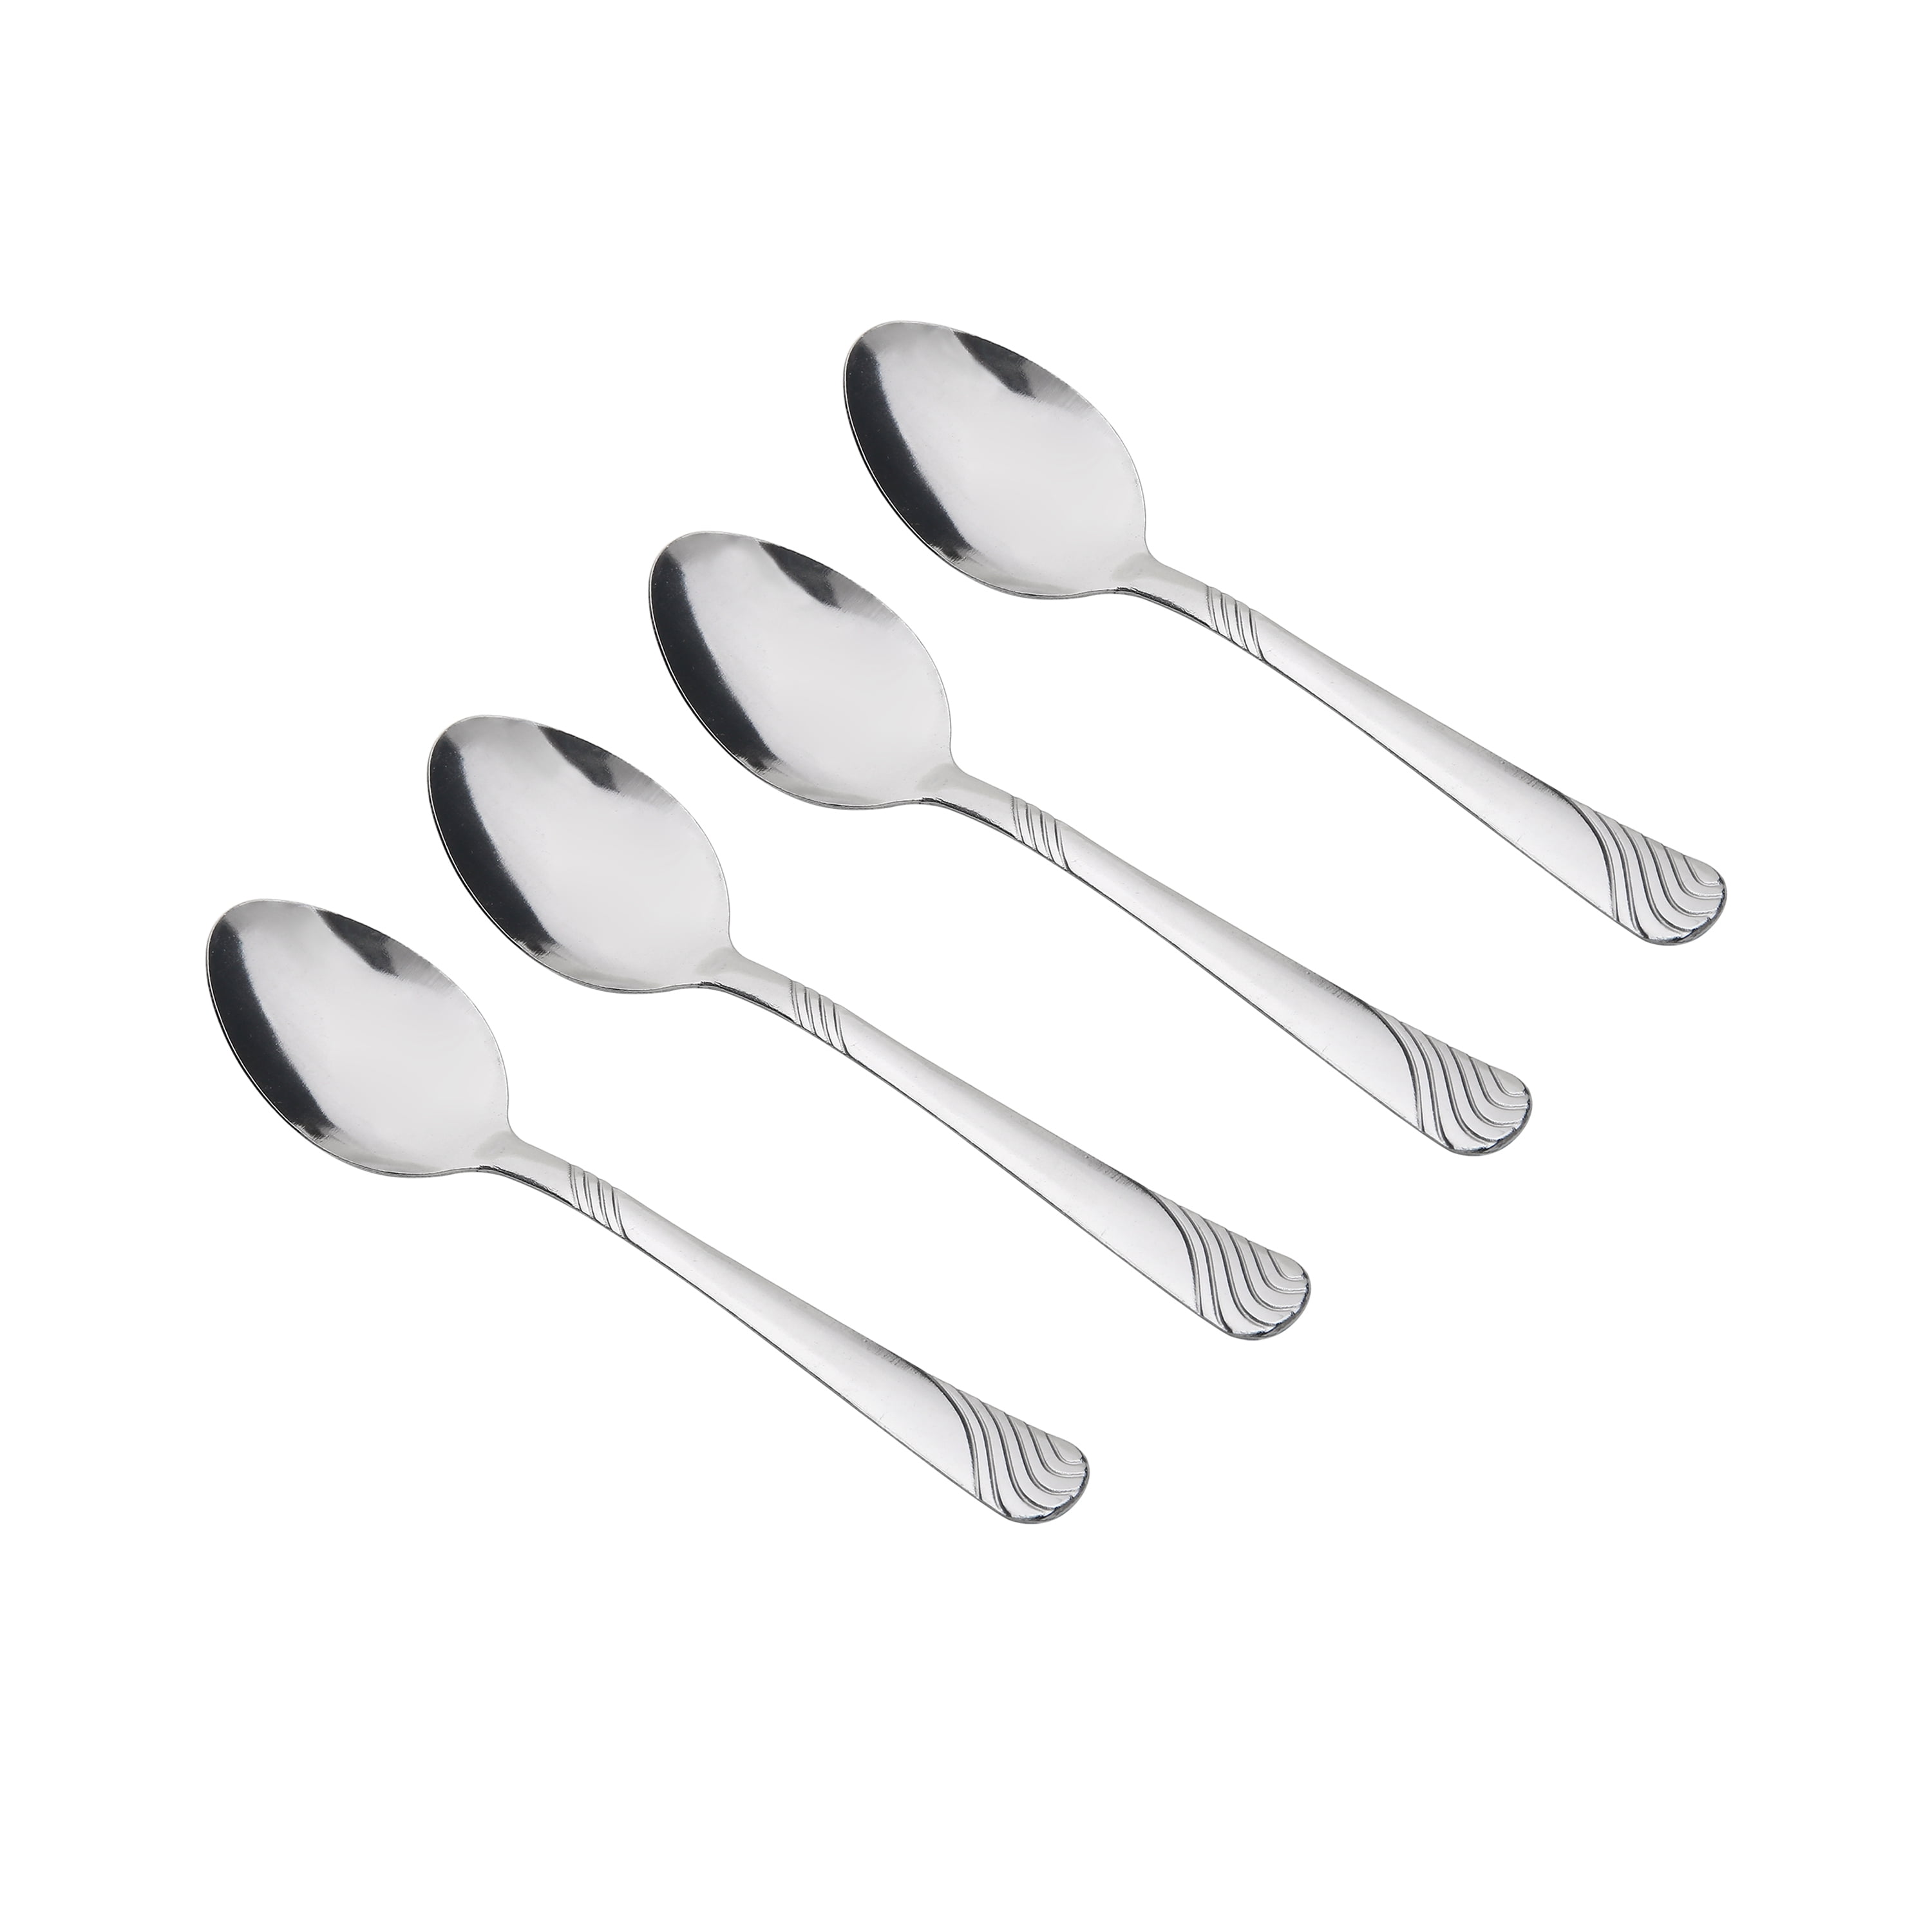 Mainstays 4-Piece Swirl Stainless Steel Teaspoon Set, Silver Tableware